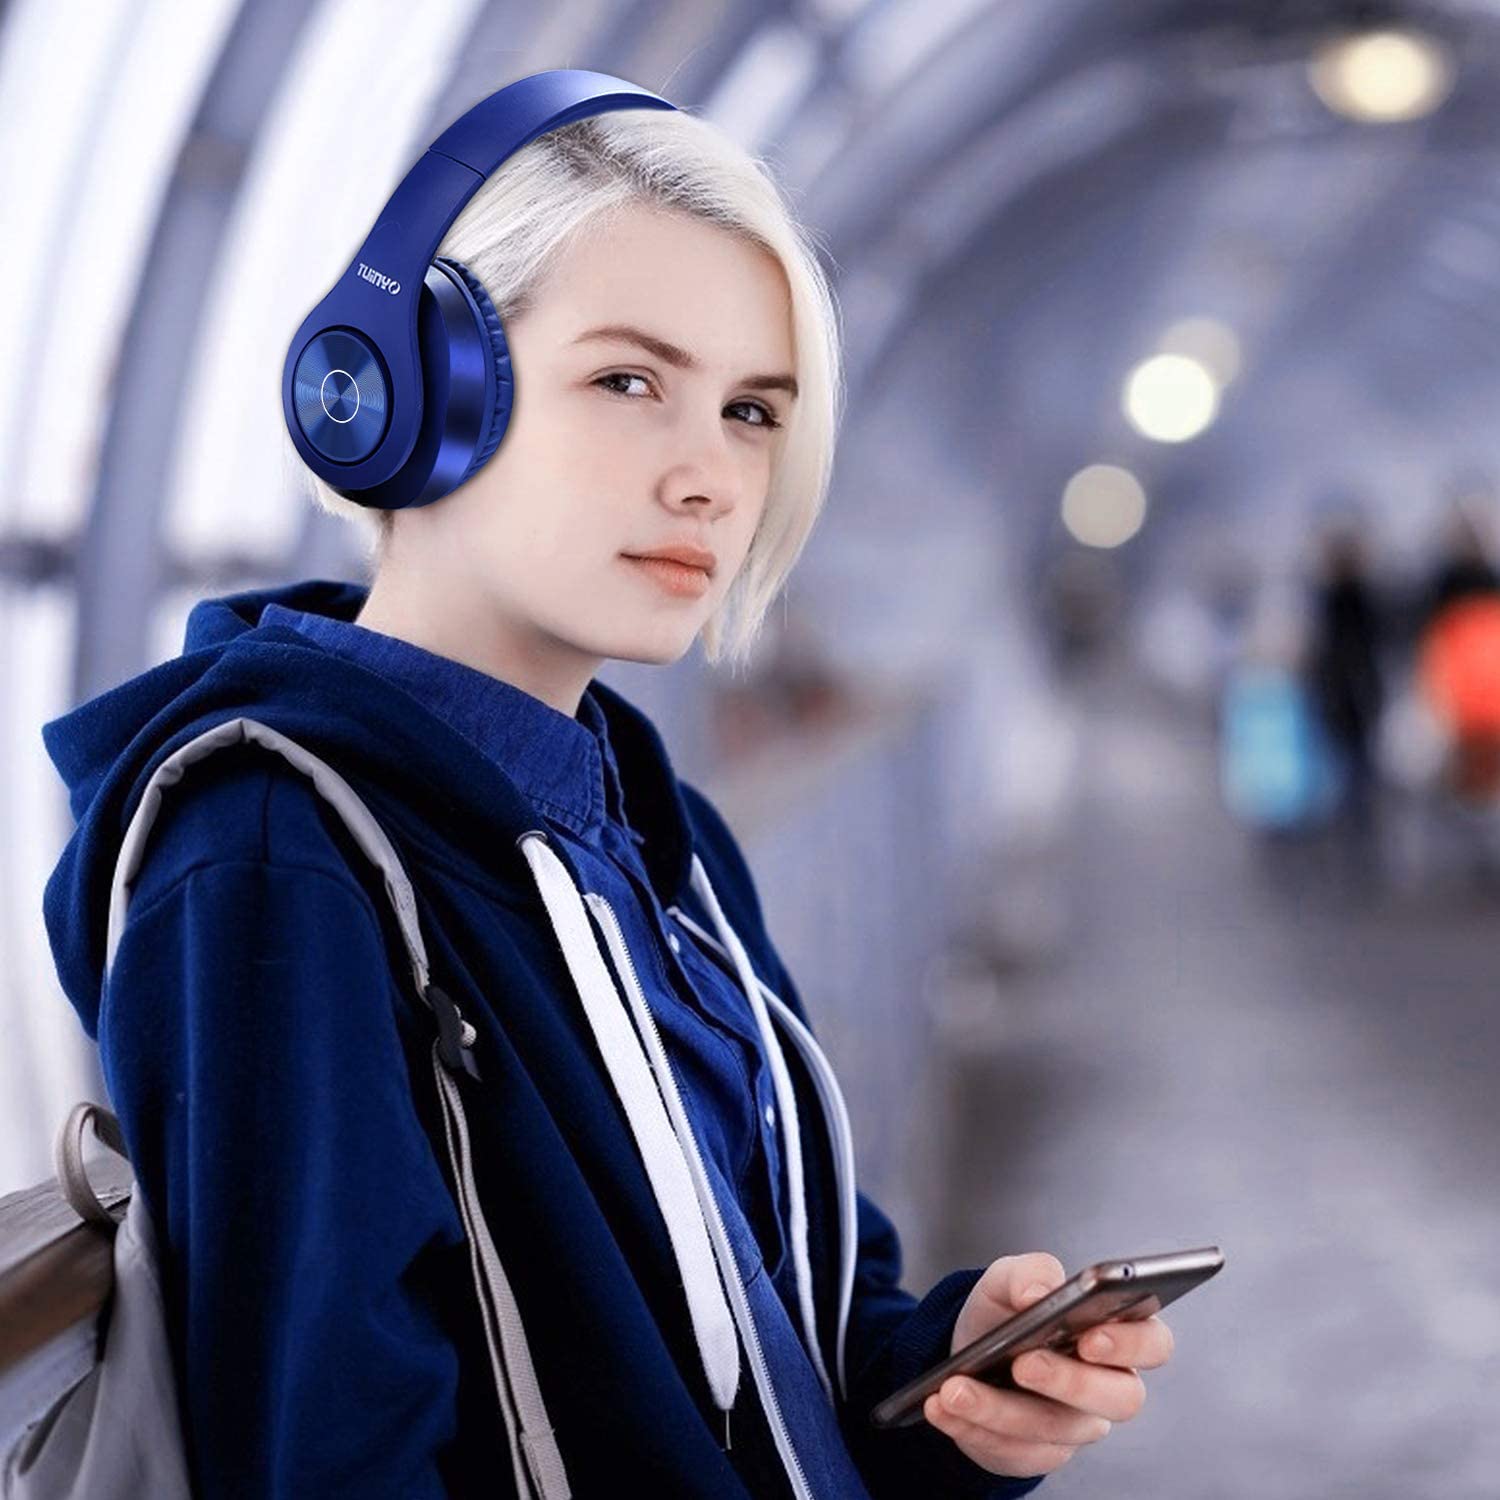  TUINYO Bluetooth Headphones Wireless, Over Ear Stereo